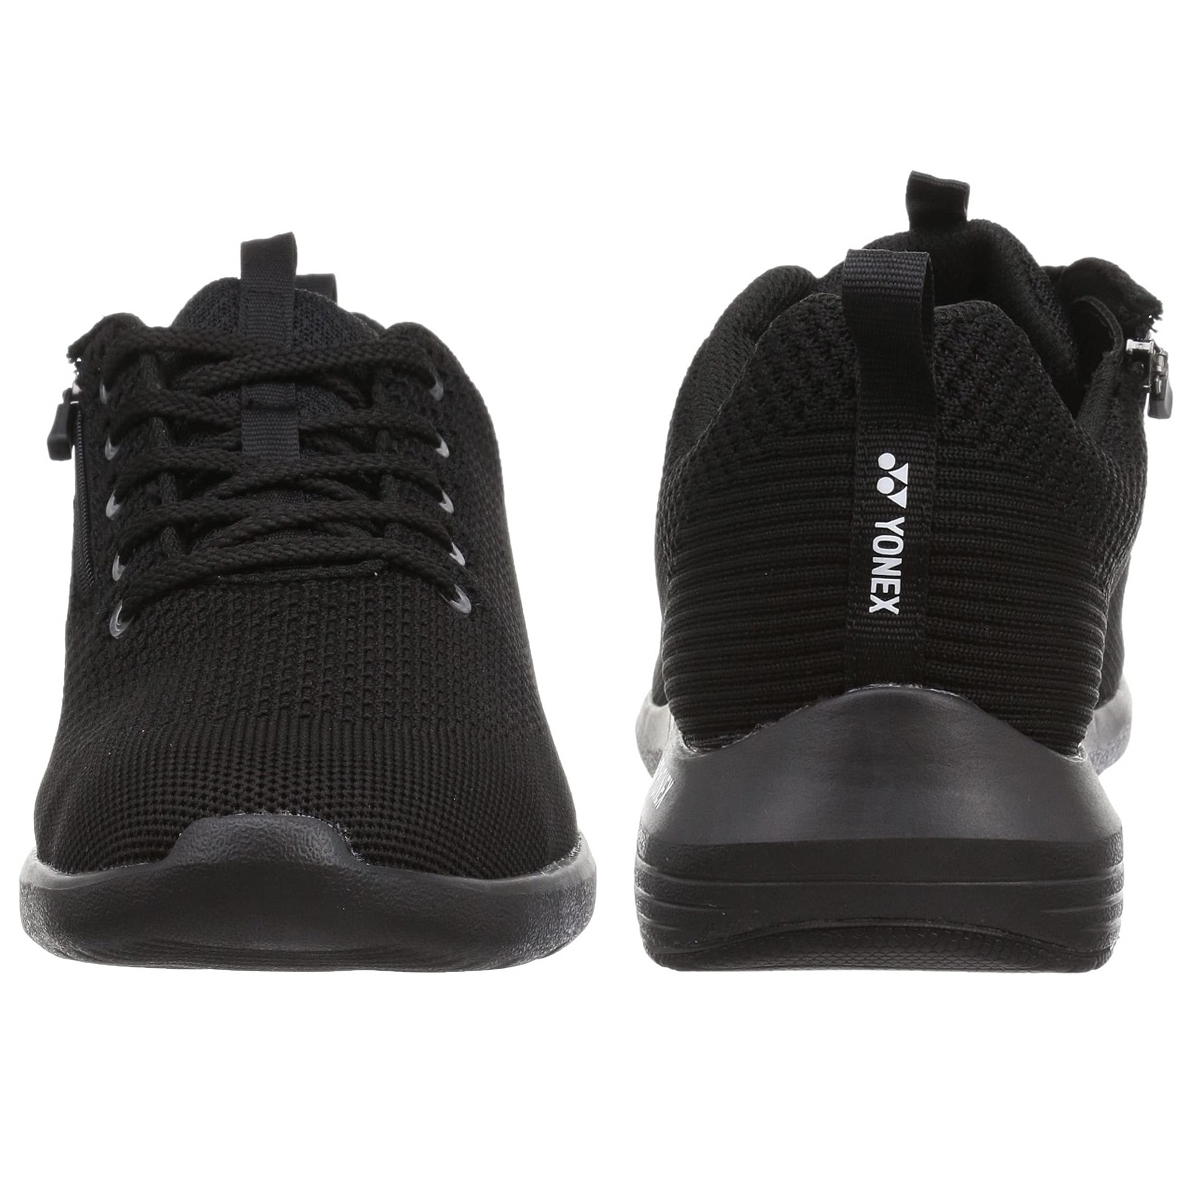 M01Y black / black 24.5cm Yonex YONEX power cushion walking shoes men's 3.5E fastener attaching light weight sneakers 